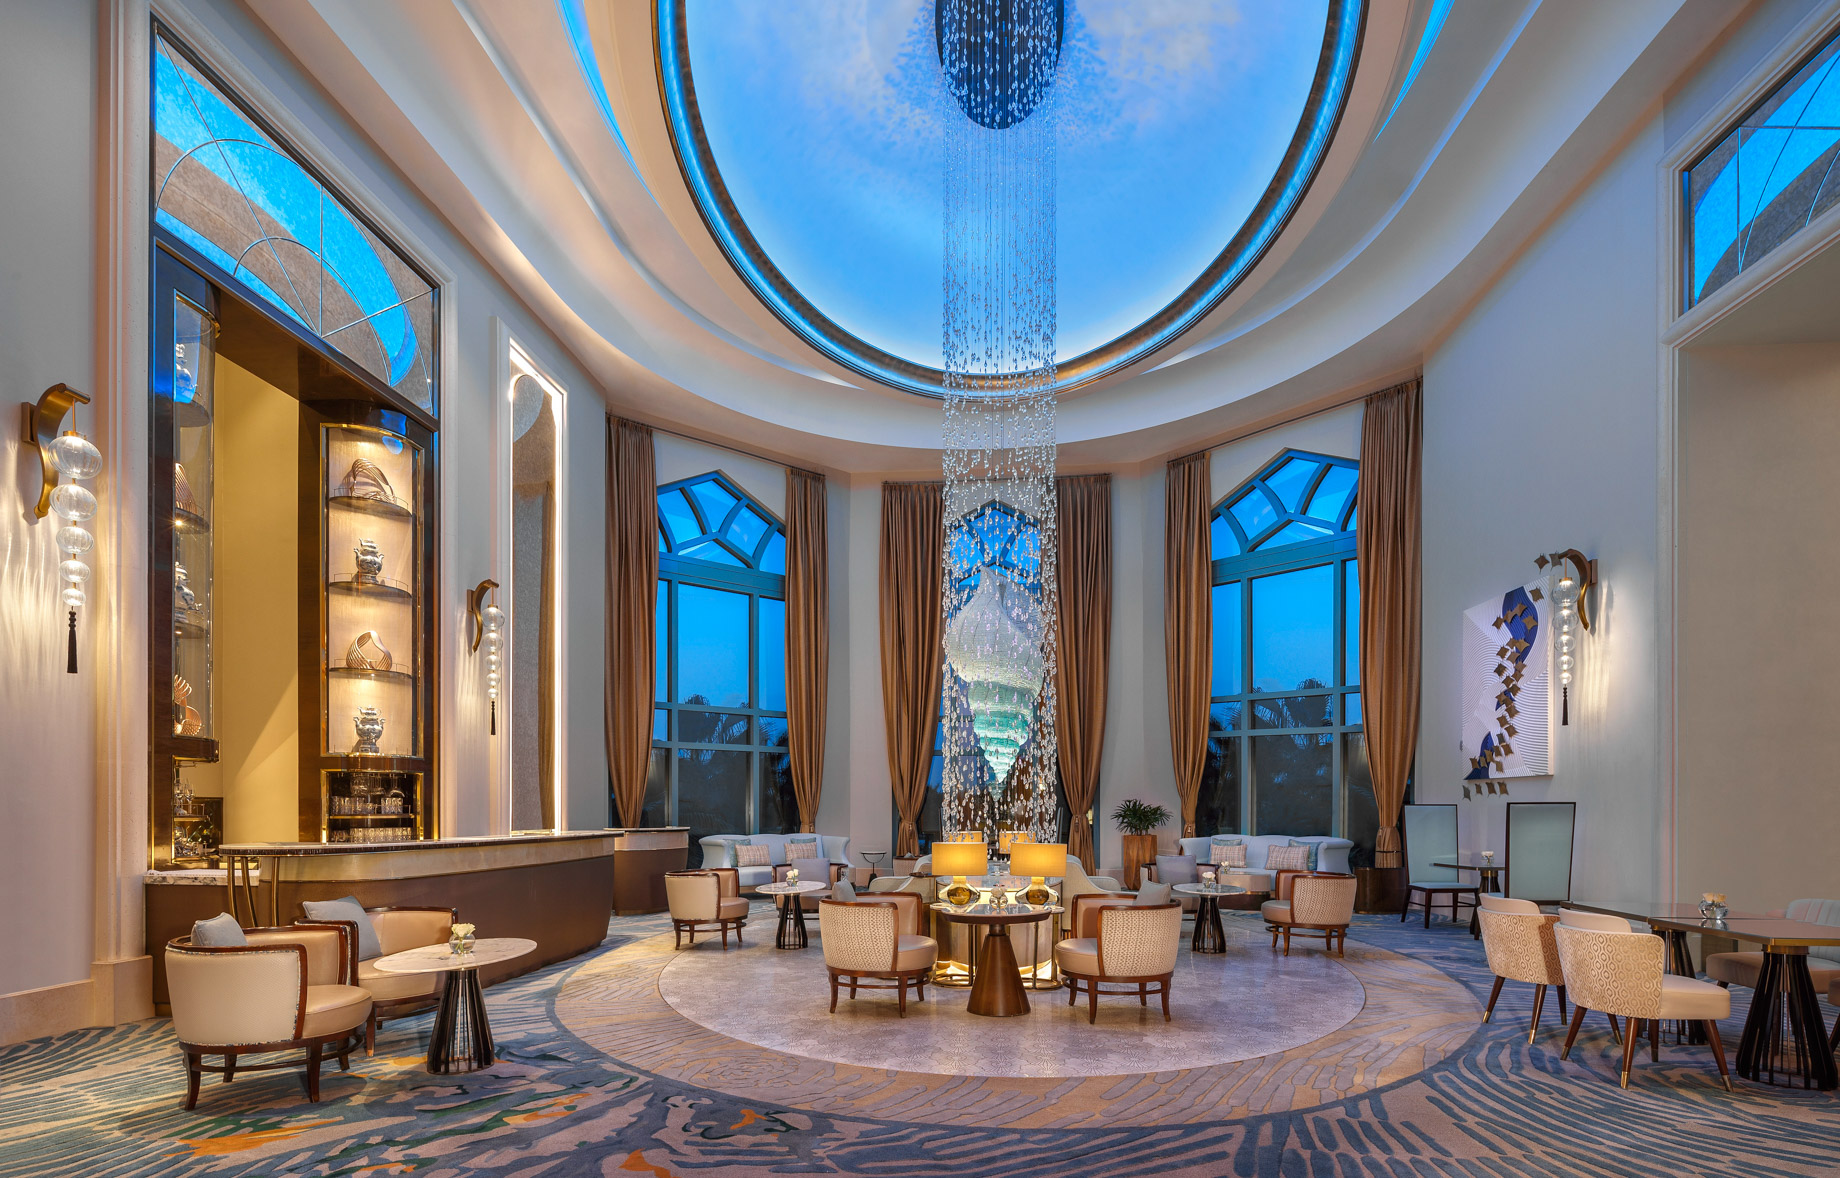 Atlantis The Palm Resort – Crescent Rd, Dubai, UAE – Platos Restaurant